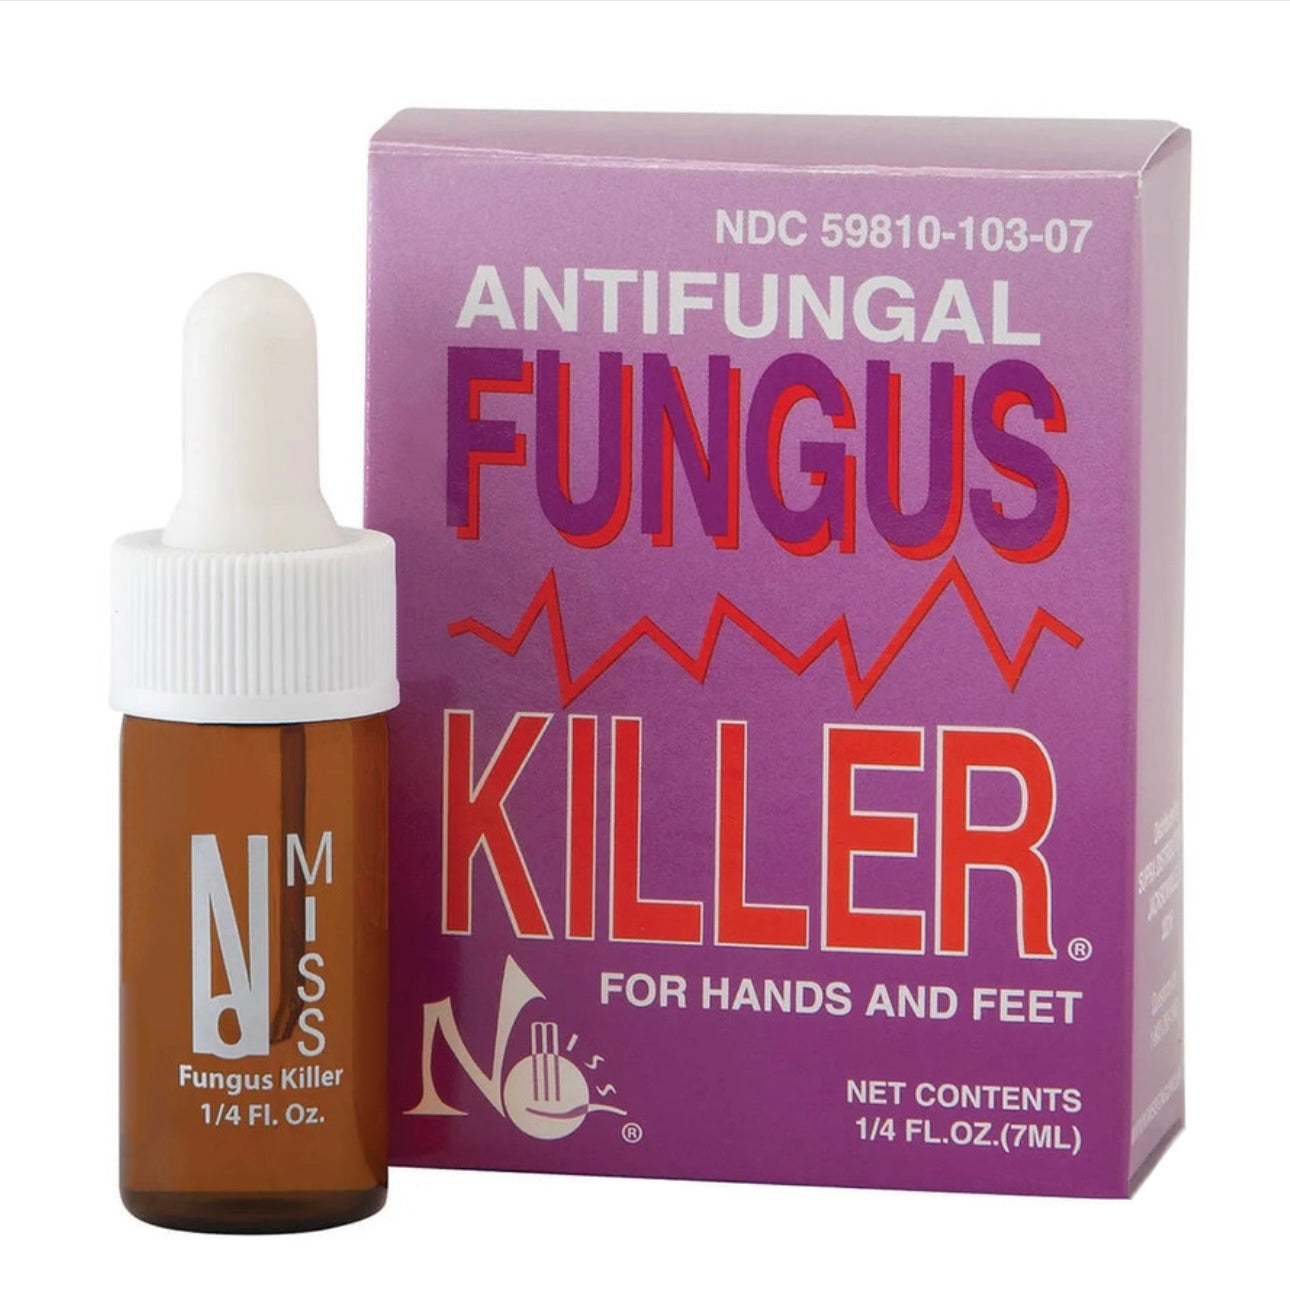 Antifungal Fungus Killer For Hands & Feet